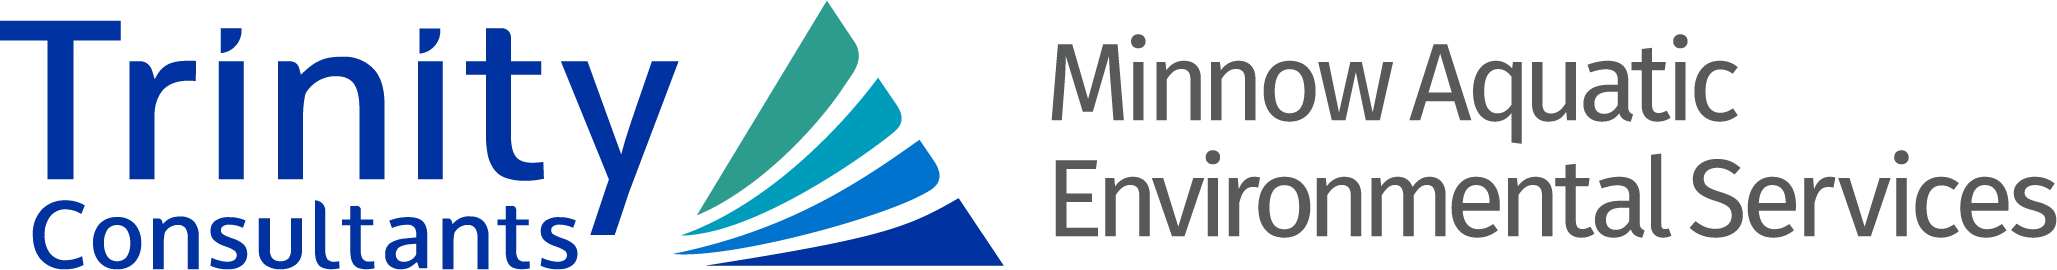 Minnow Aquatic Environmental Services Logo